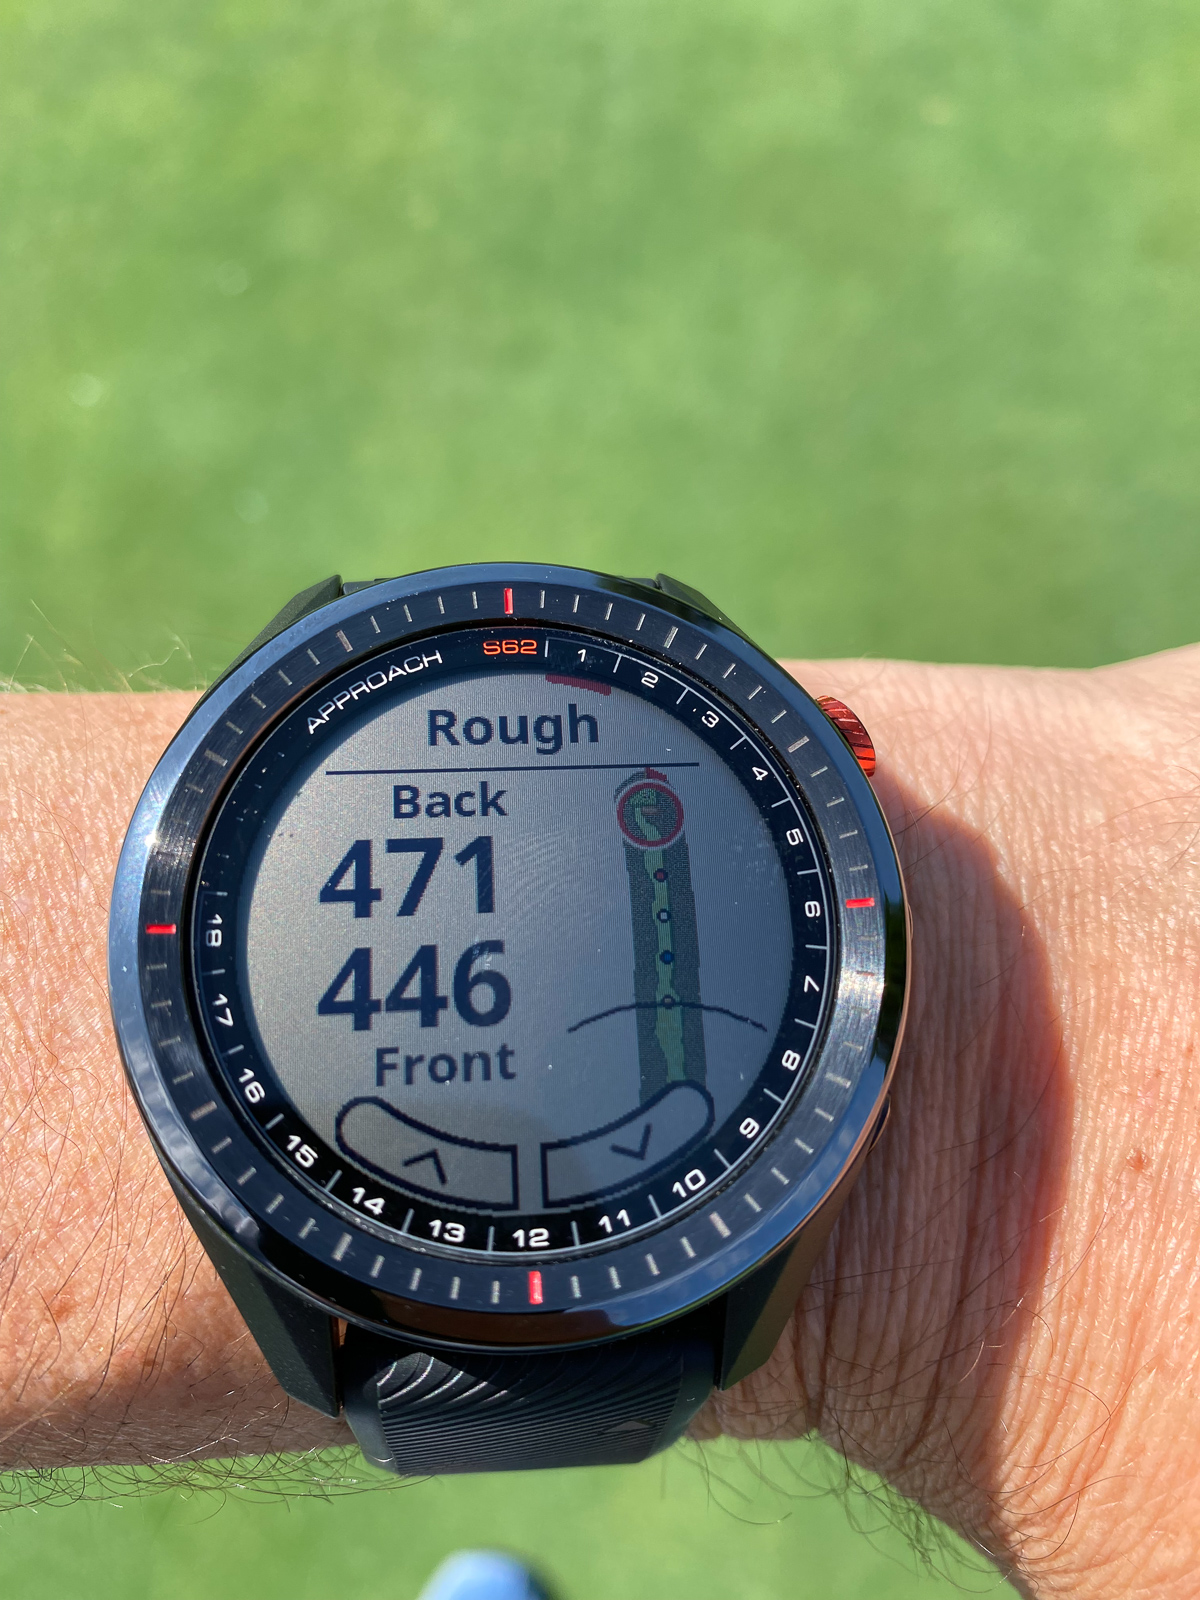 Garmin Approach S62 GPS Golf Watch Review: Is It Worth $500?